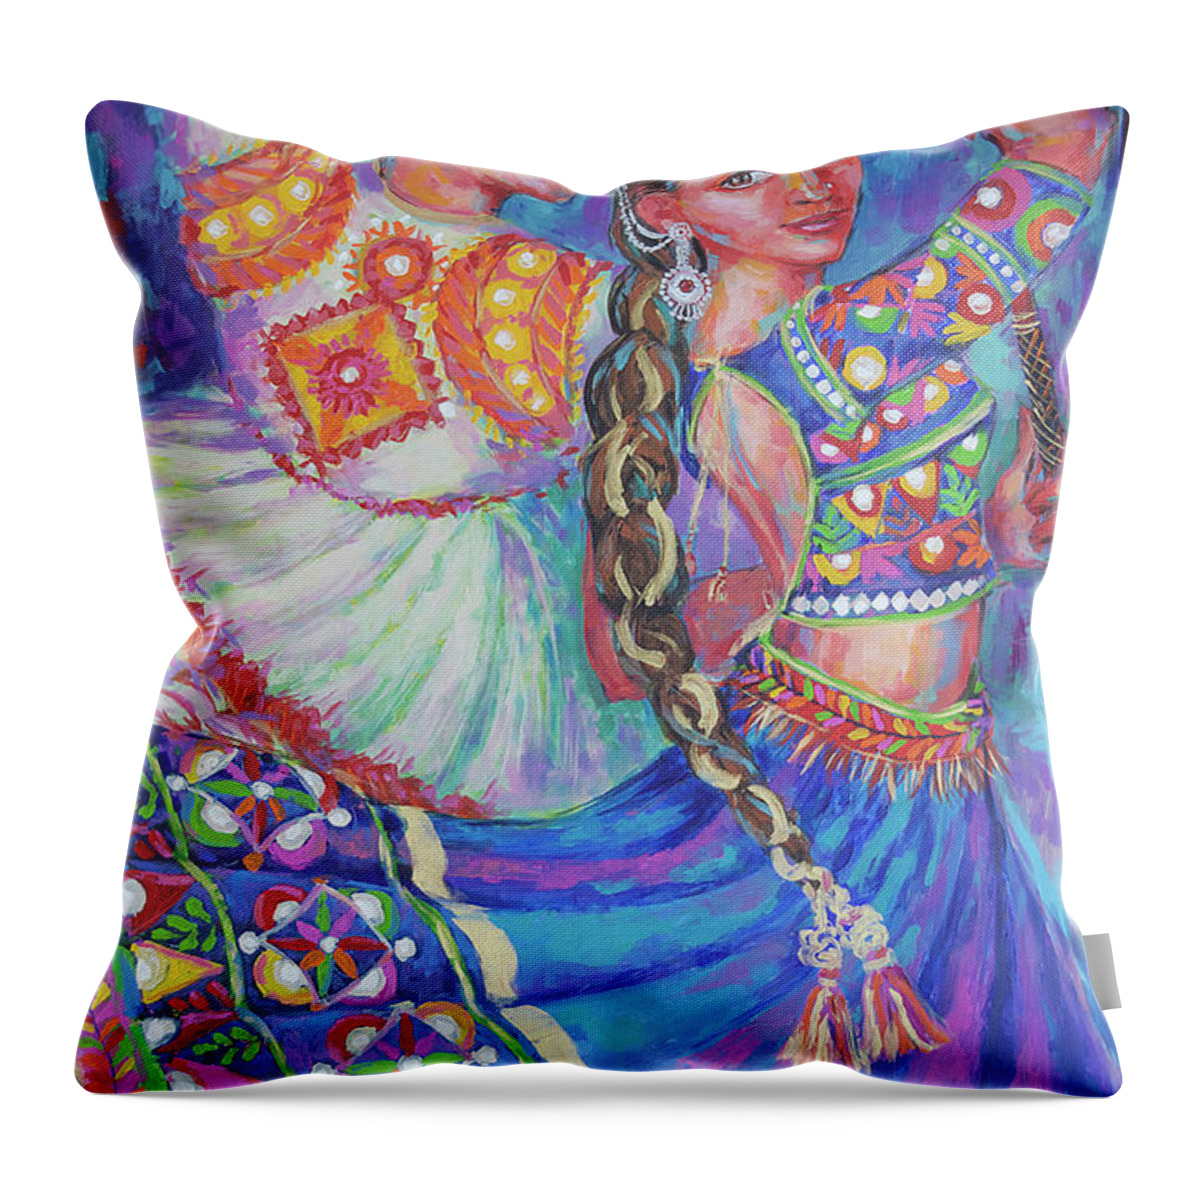  Throw Pillow featuring the painting Dandiya Raas by Jyotika Shroff